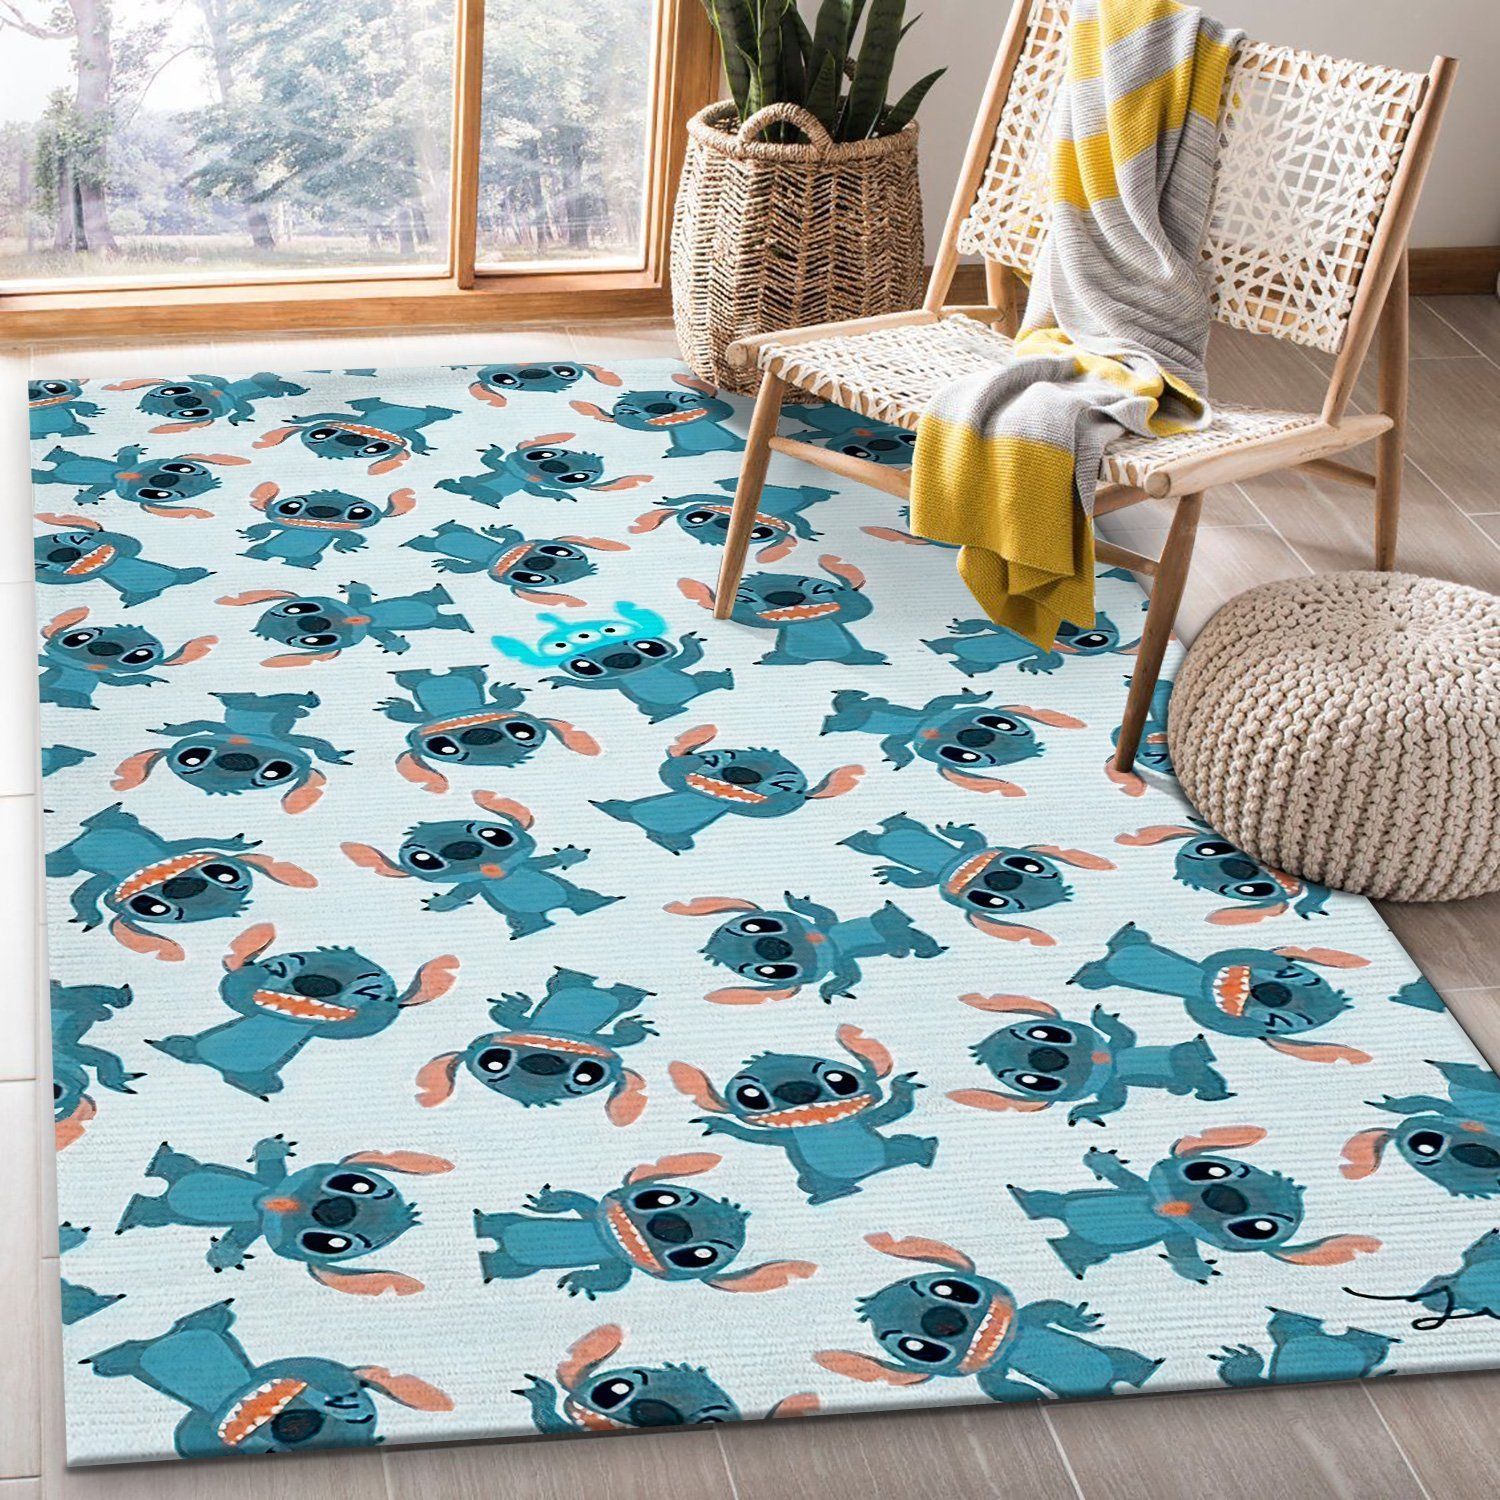 Stitch Disney Movies Area Rugs Living Room Carpet Floor Decor The US Decor - Indoor Outdoor Rugs 1